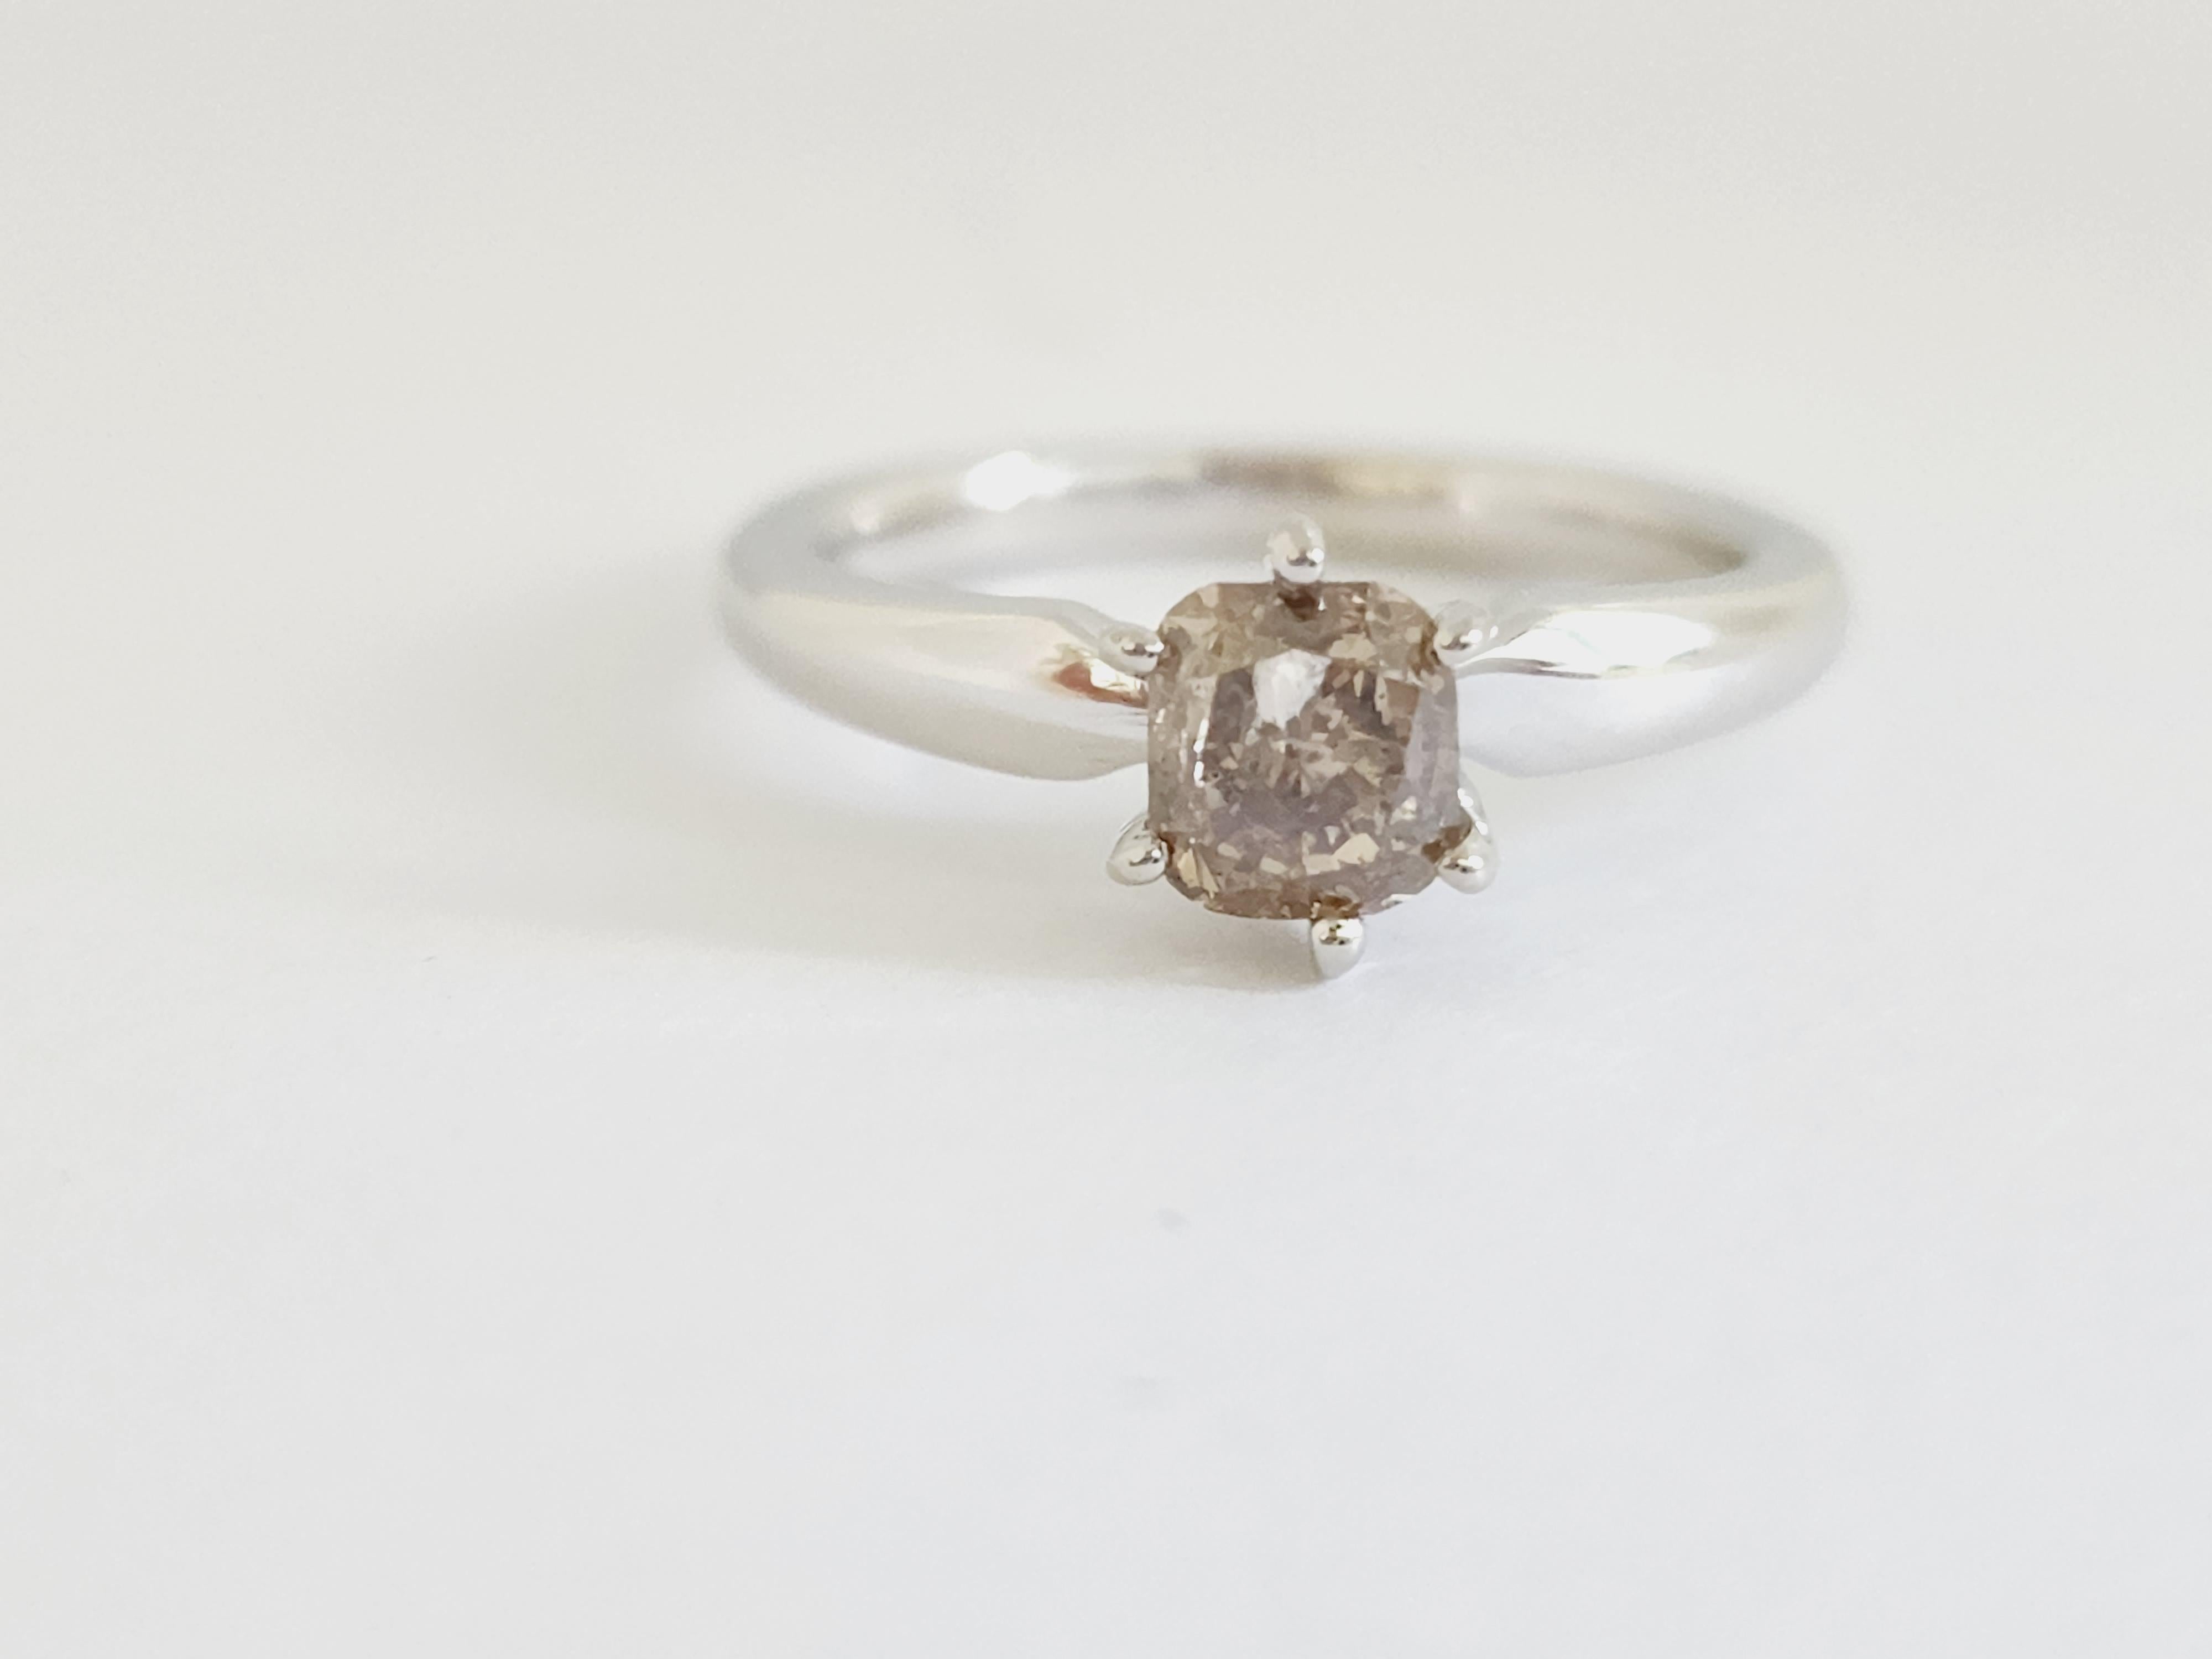 GIA Natural fancy dark brown cushion diamond weighing 1.08 carats. Set on 6-prong 14K white gold. 
Ring size: 6.75